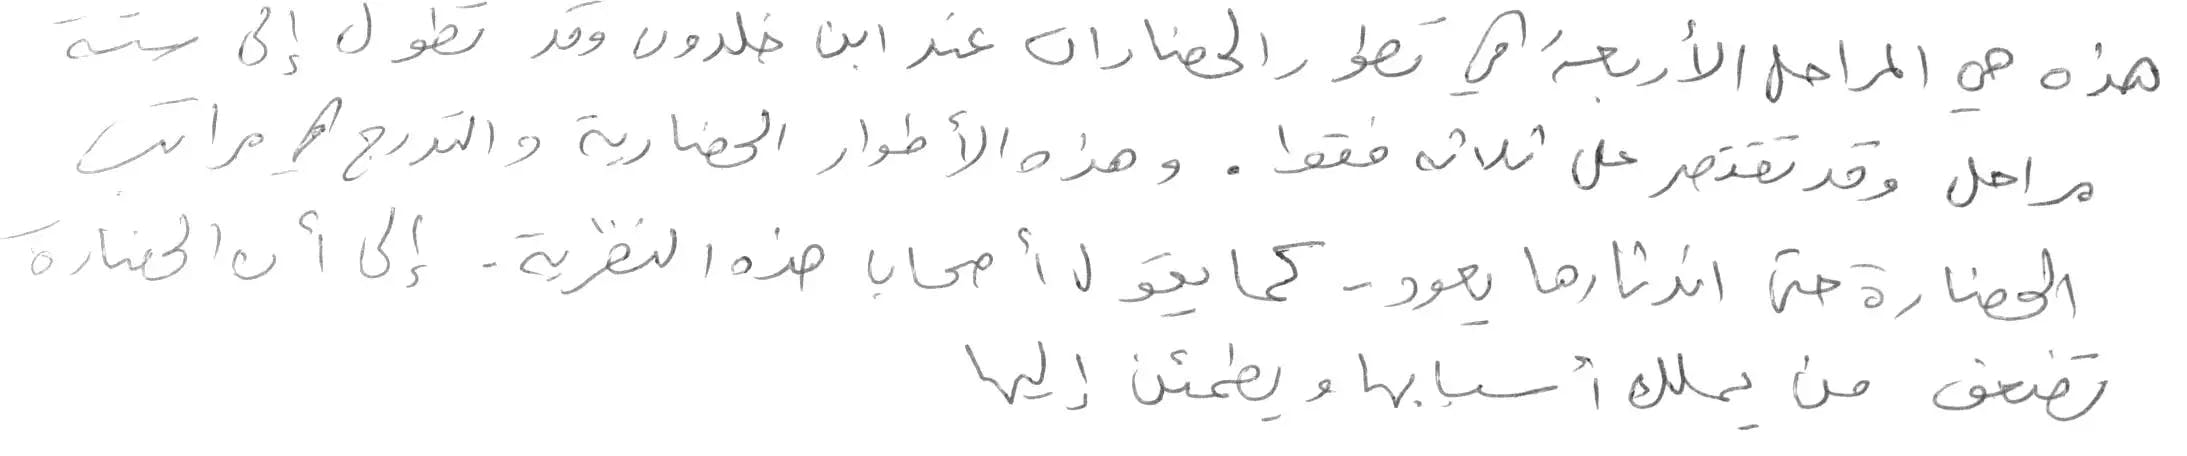 arabic-handwriting-09